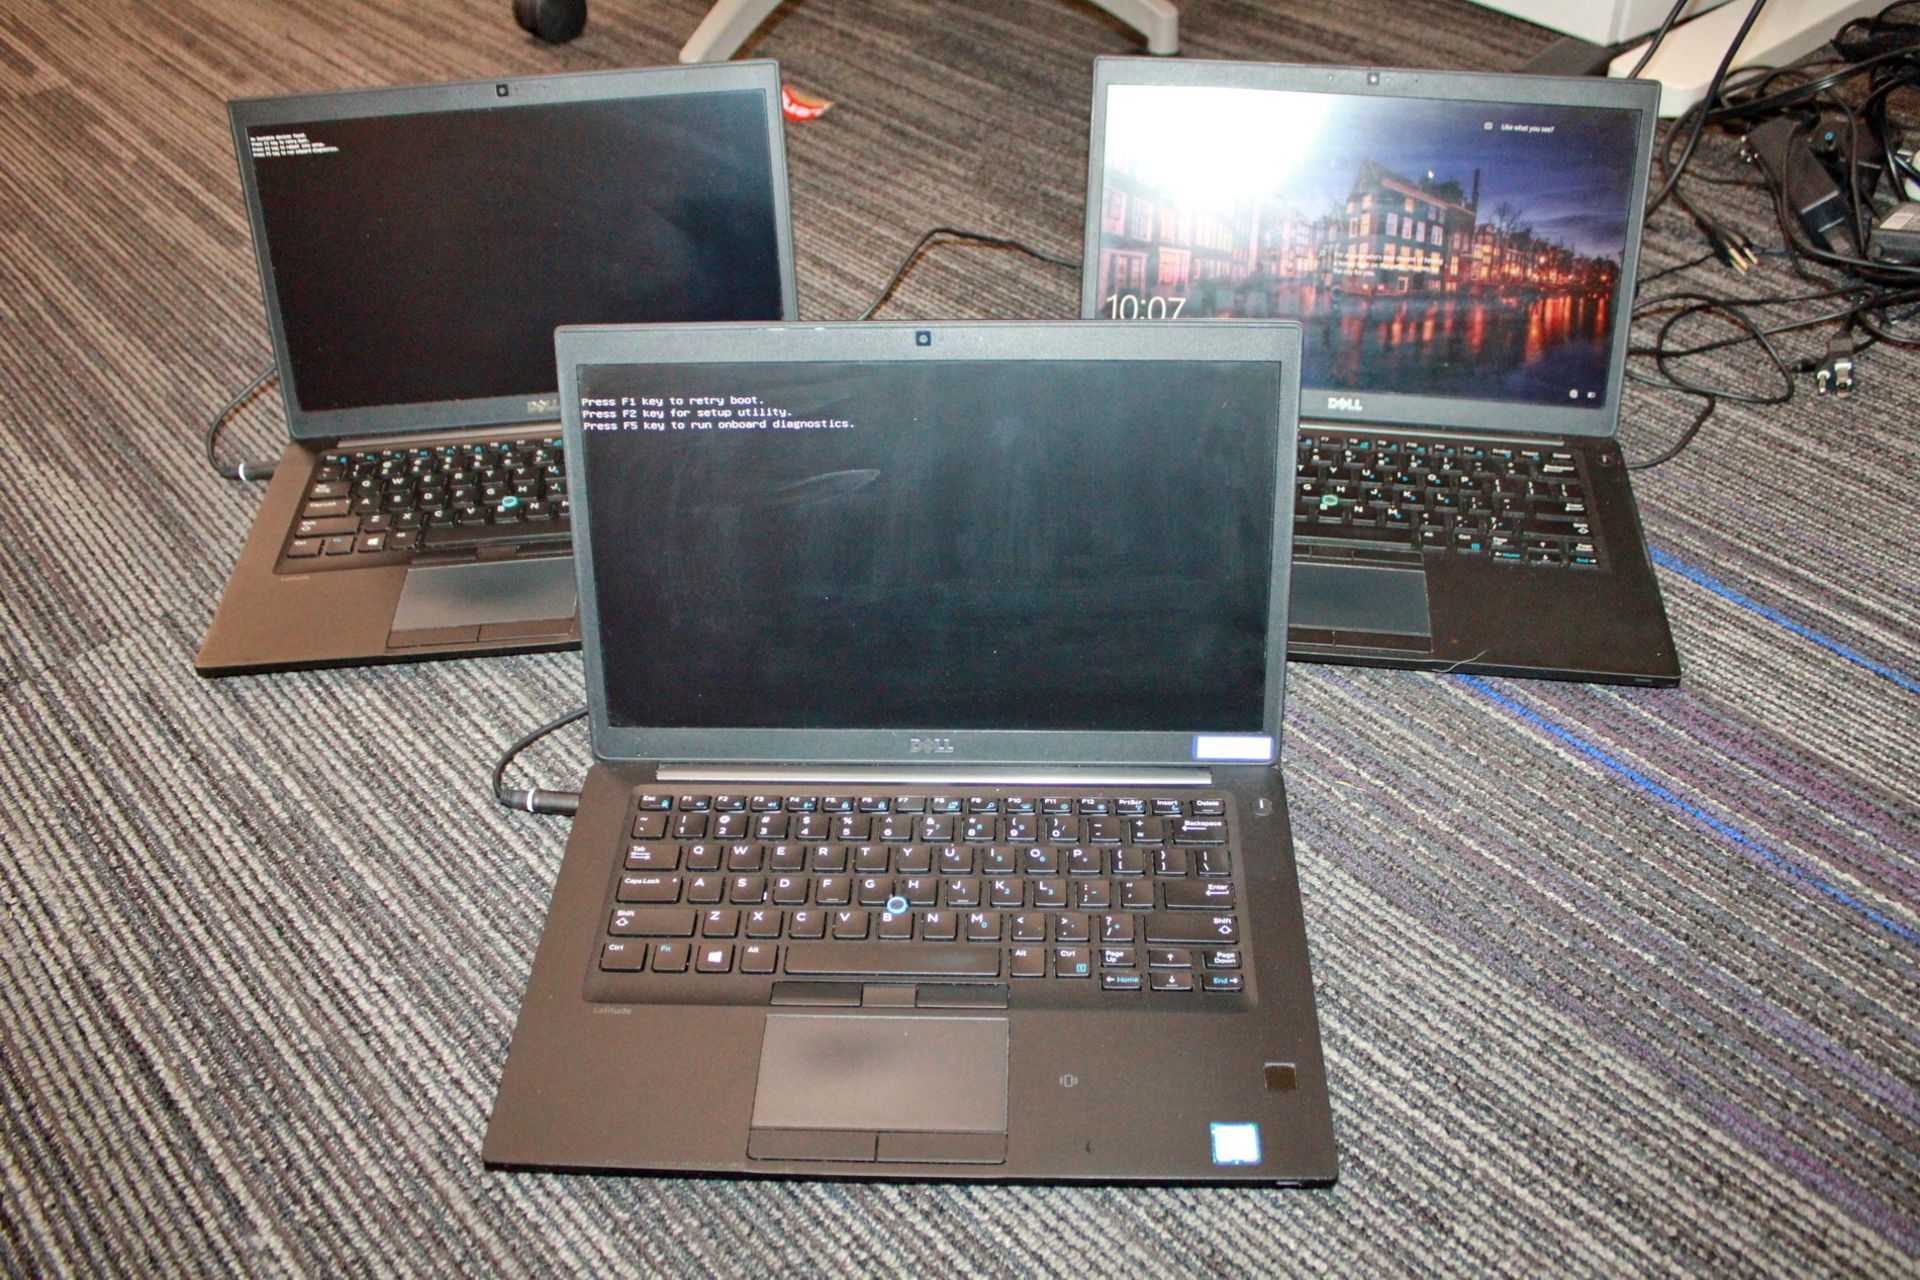 (3) Dell Latitude 7480 laptops